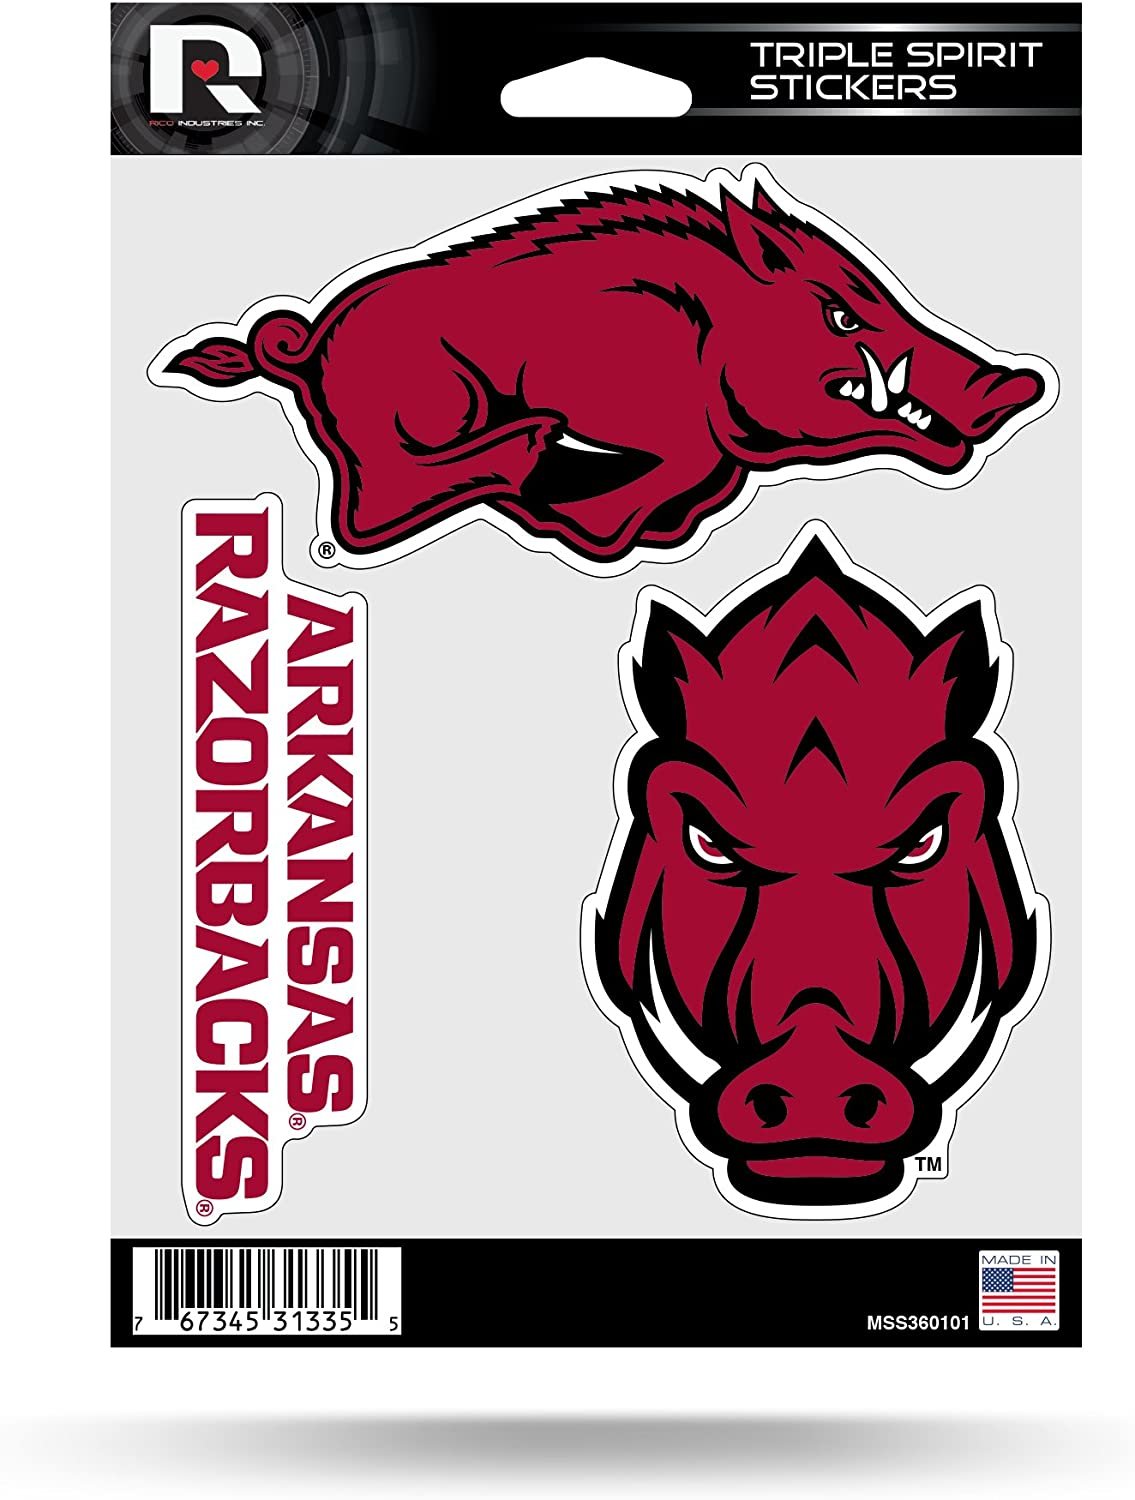 University of Arkansas Razorbacks Sticker Decal Sheet 3-Piece Die Cut 5x7 Inch